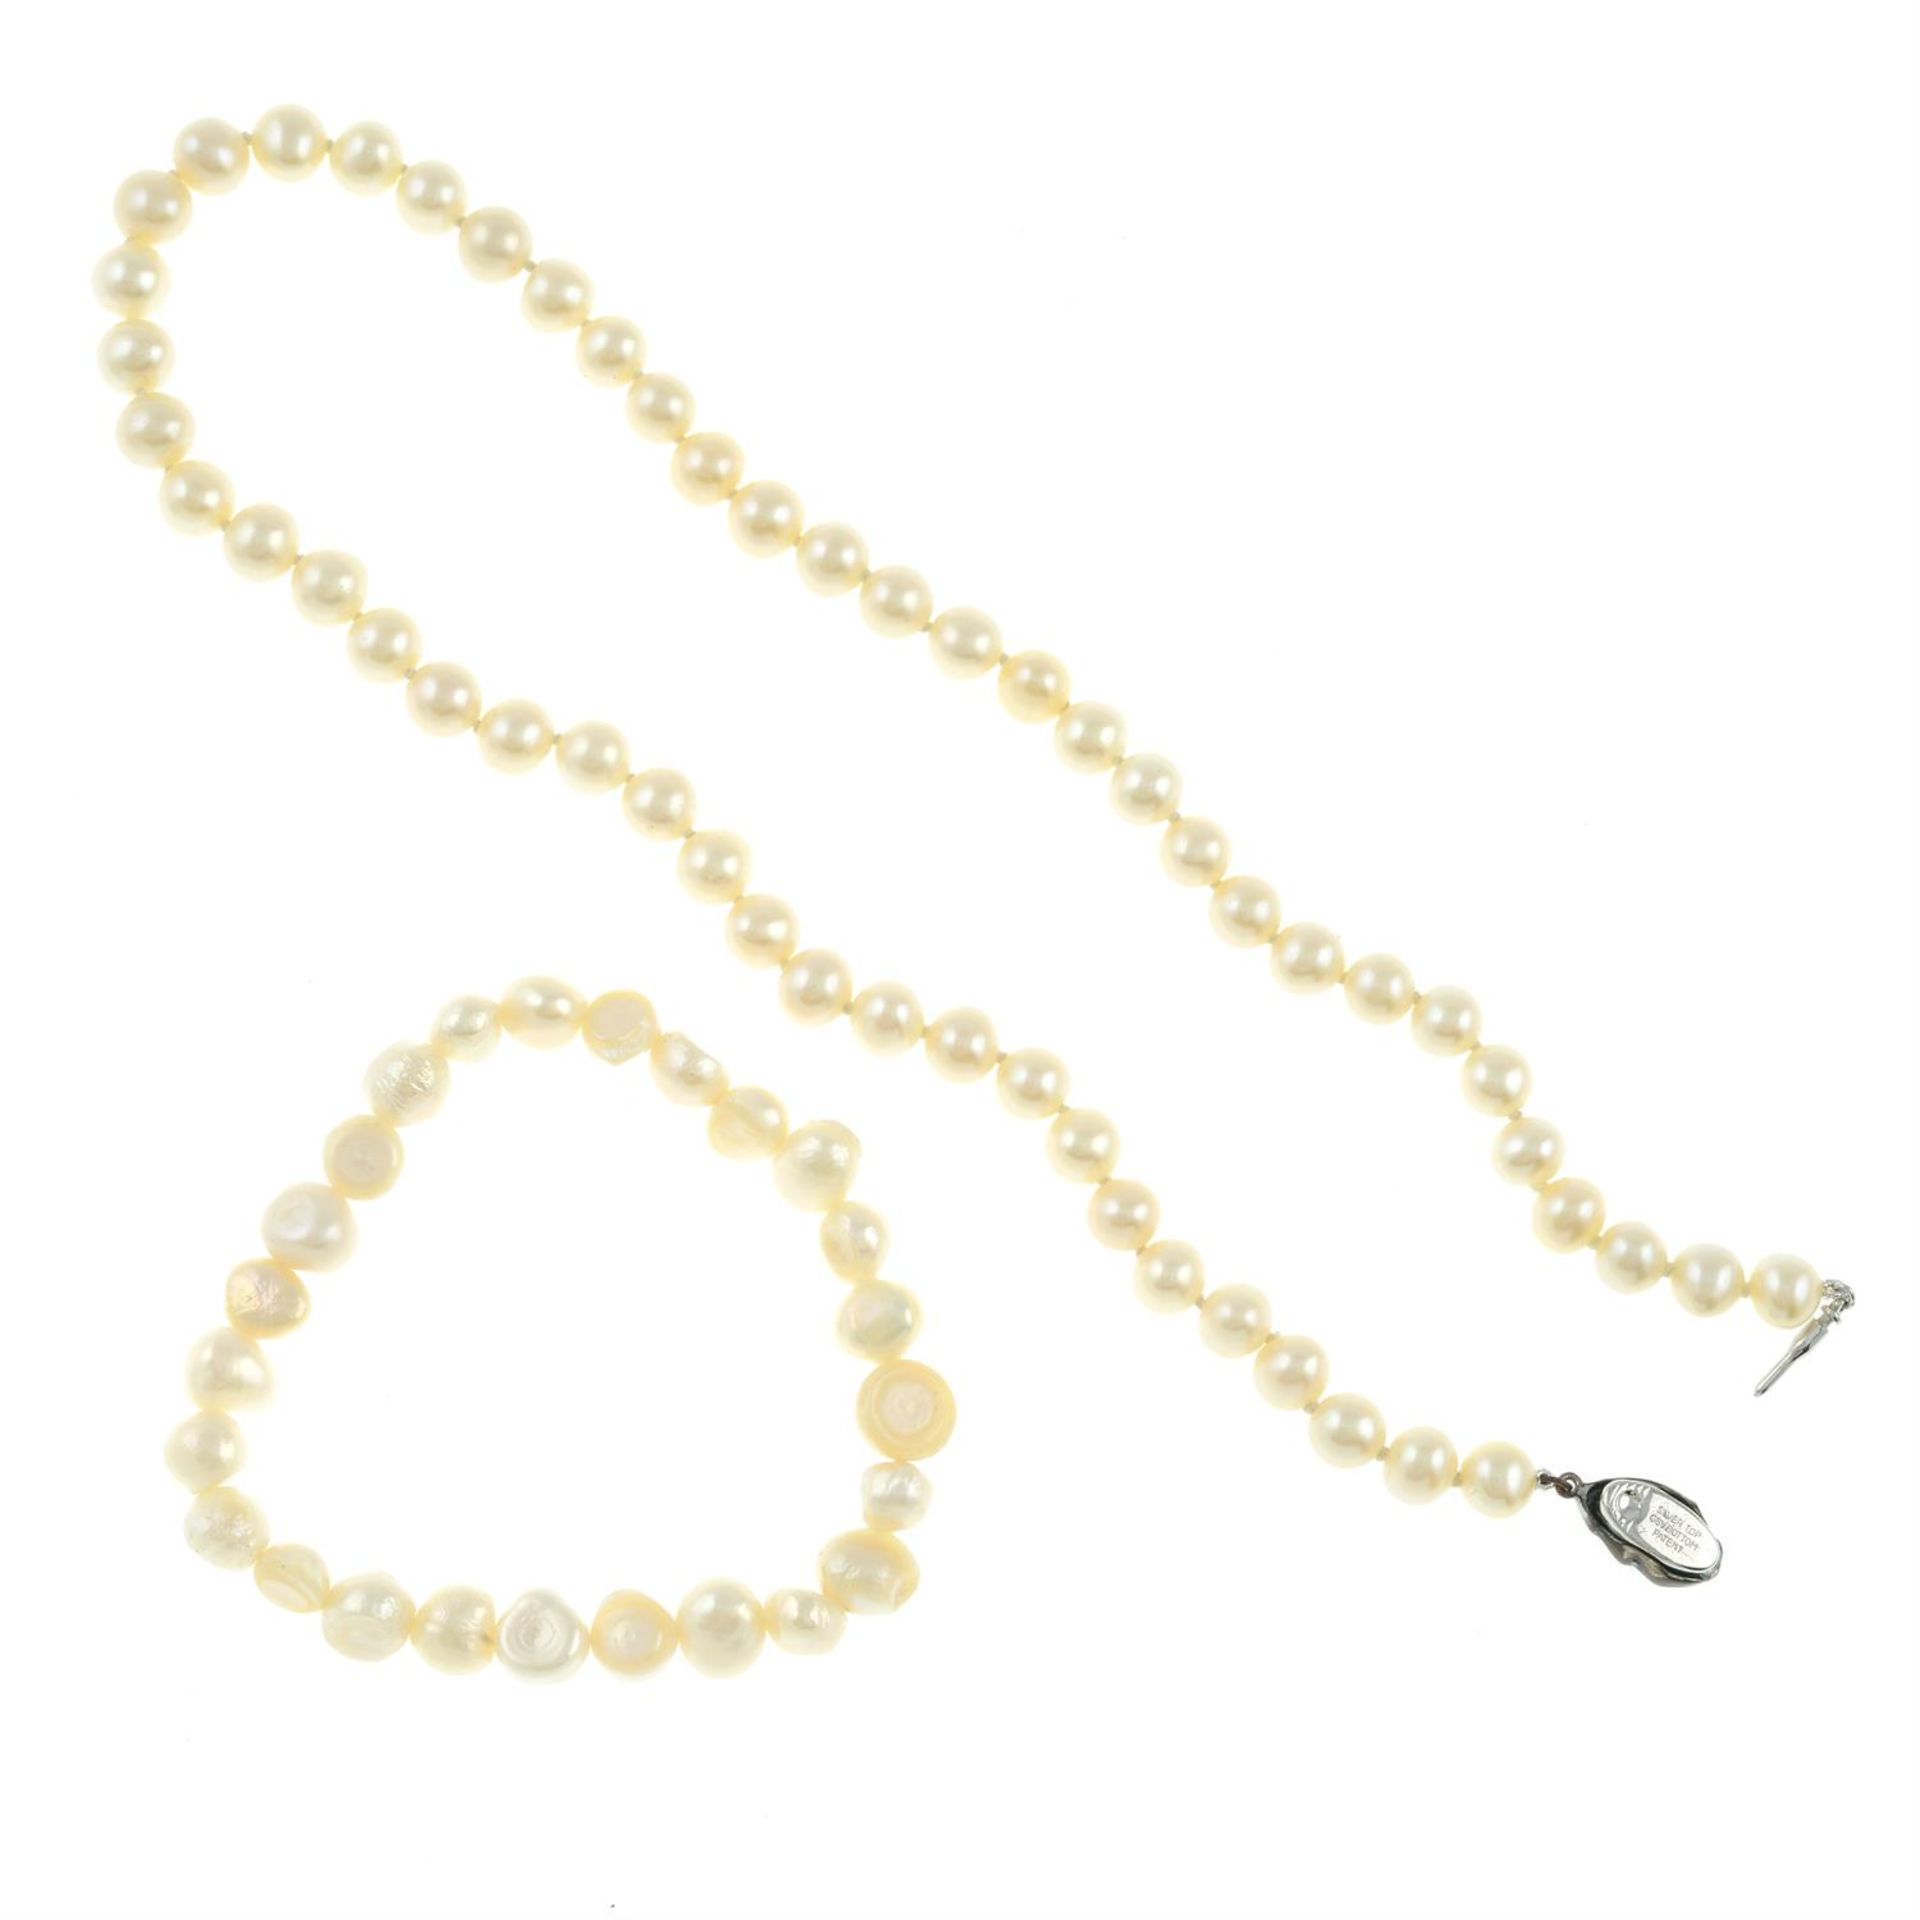 Cultured pearl necklace & bracelet - Image 2 of 2